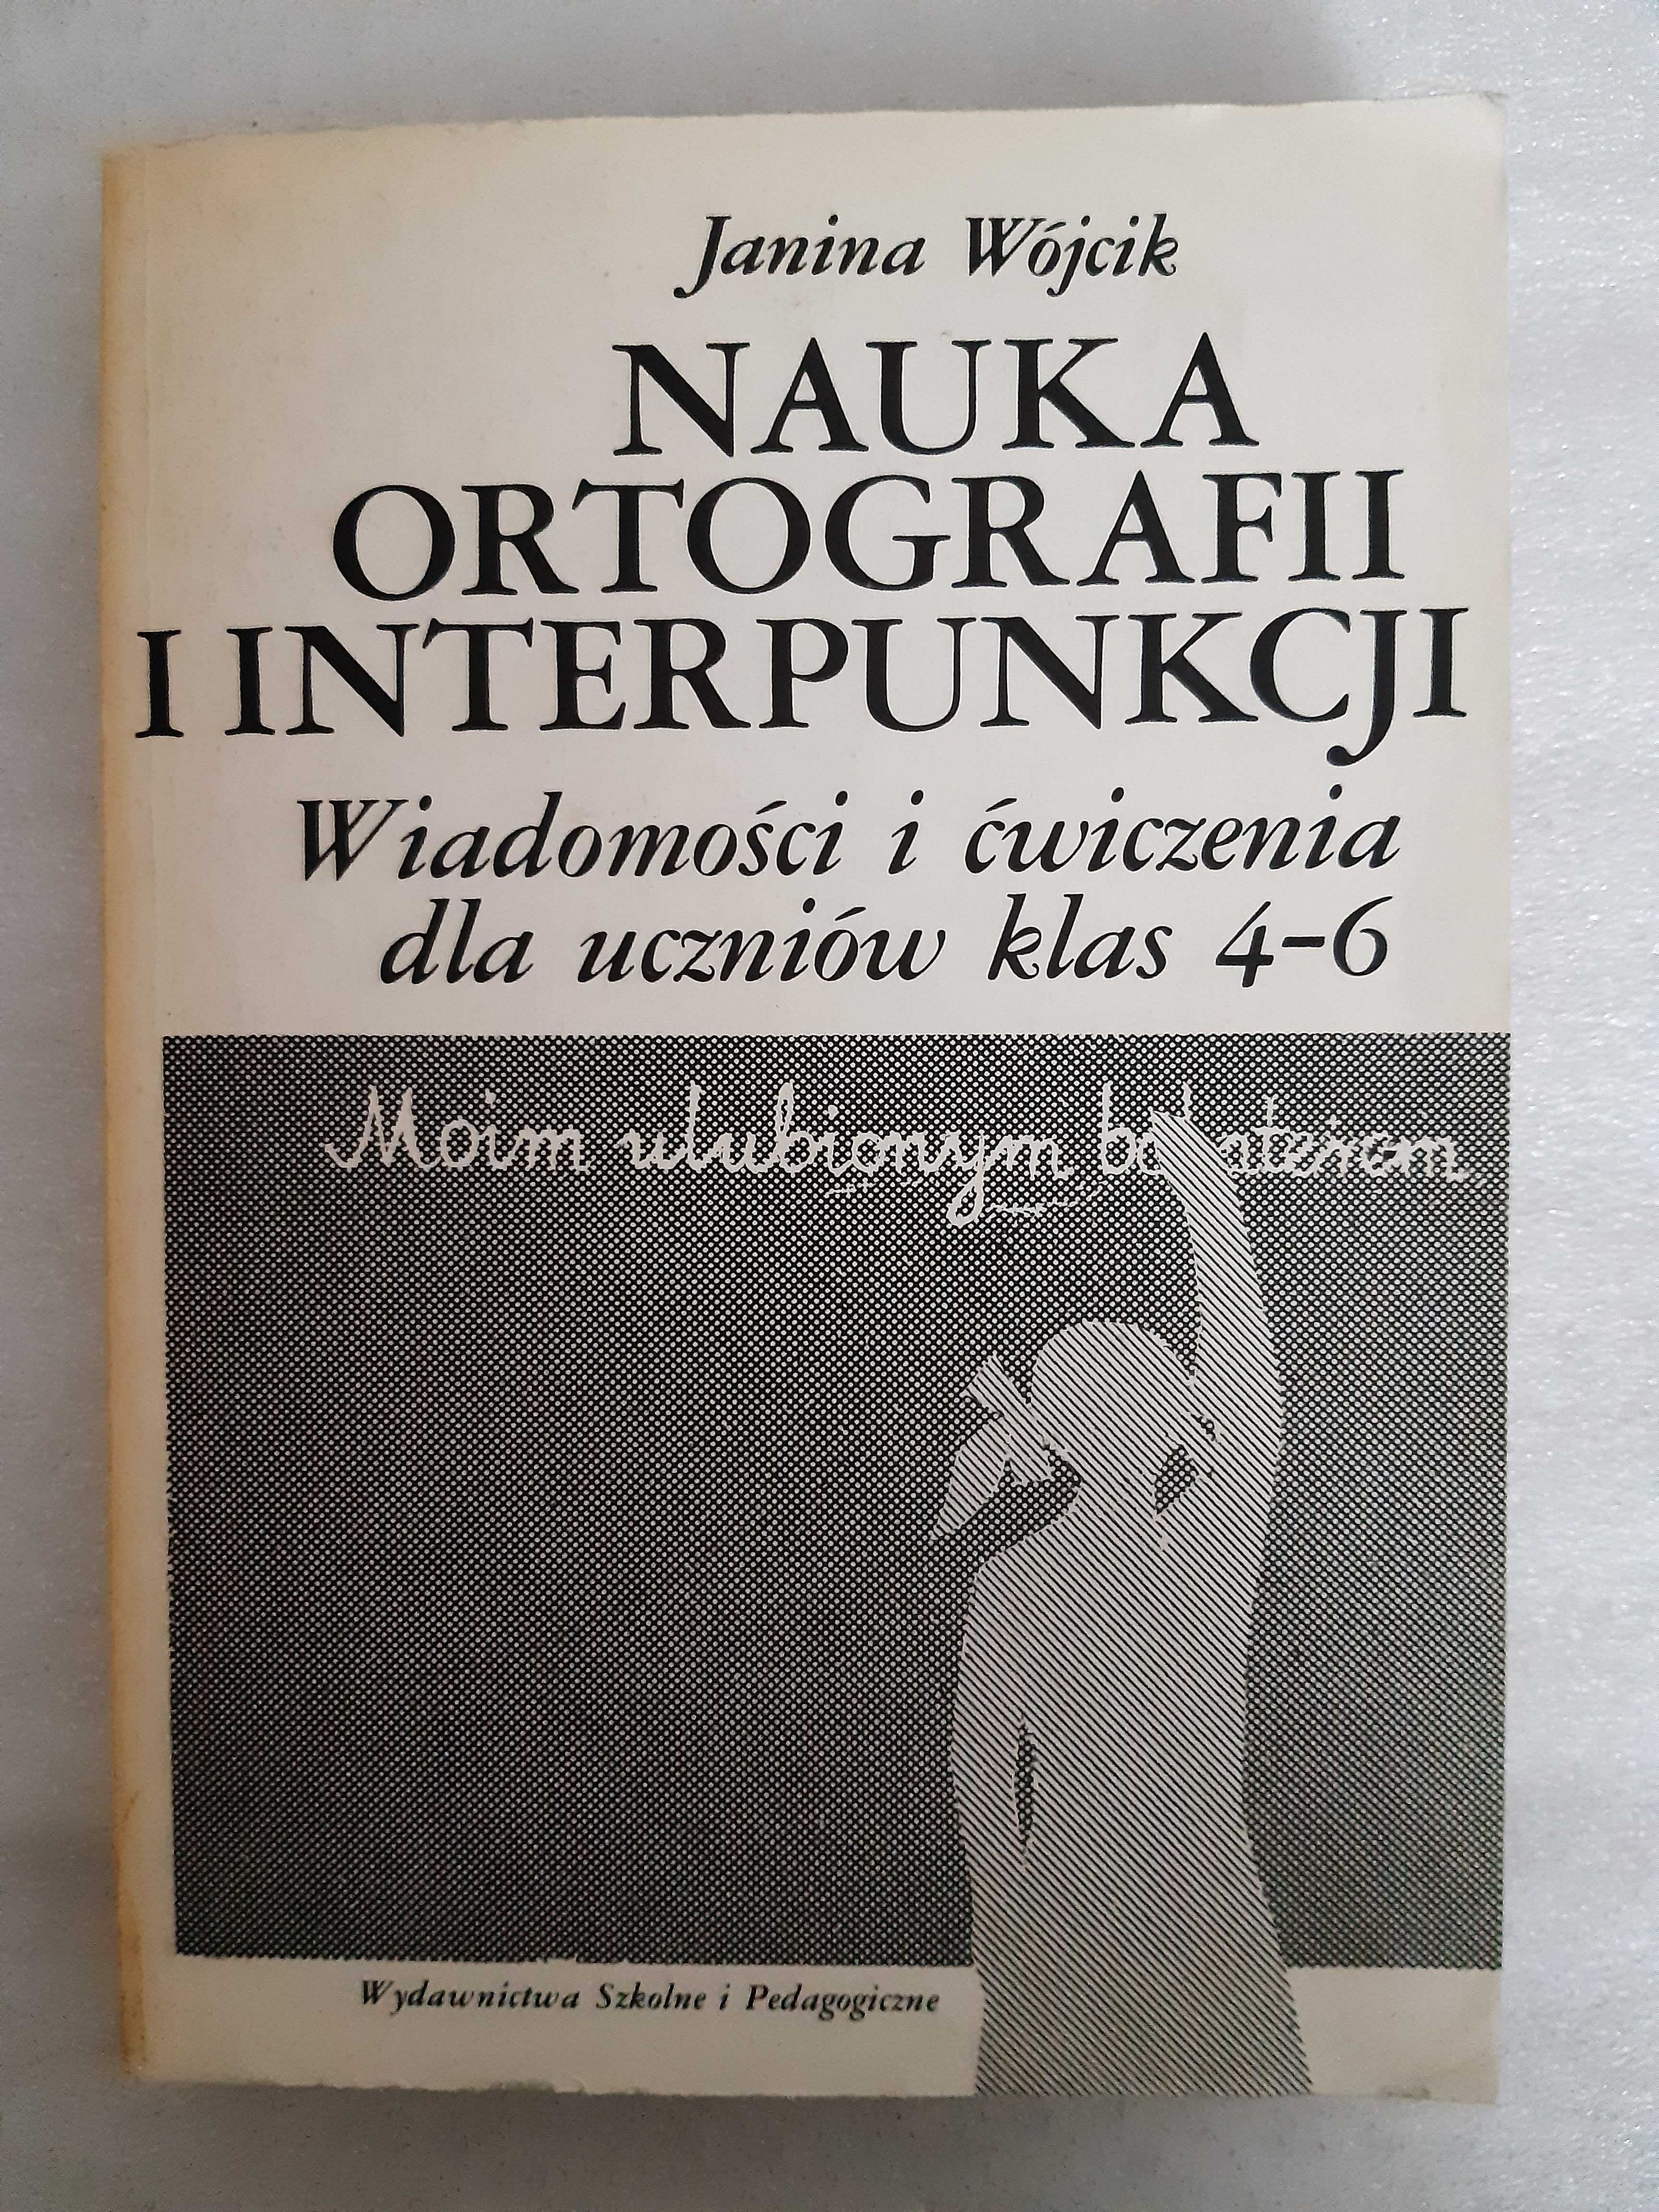 "Nauka ortografii i interpunkcji" Janina Wójcik